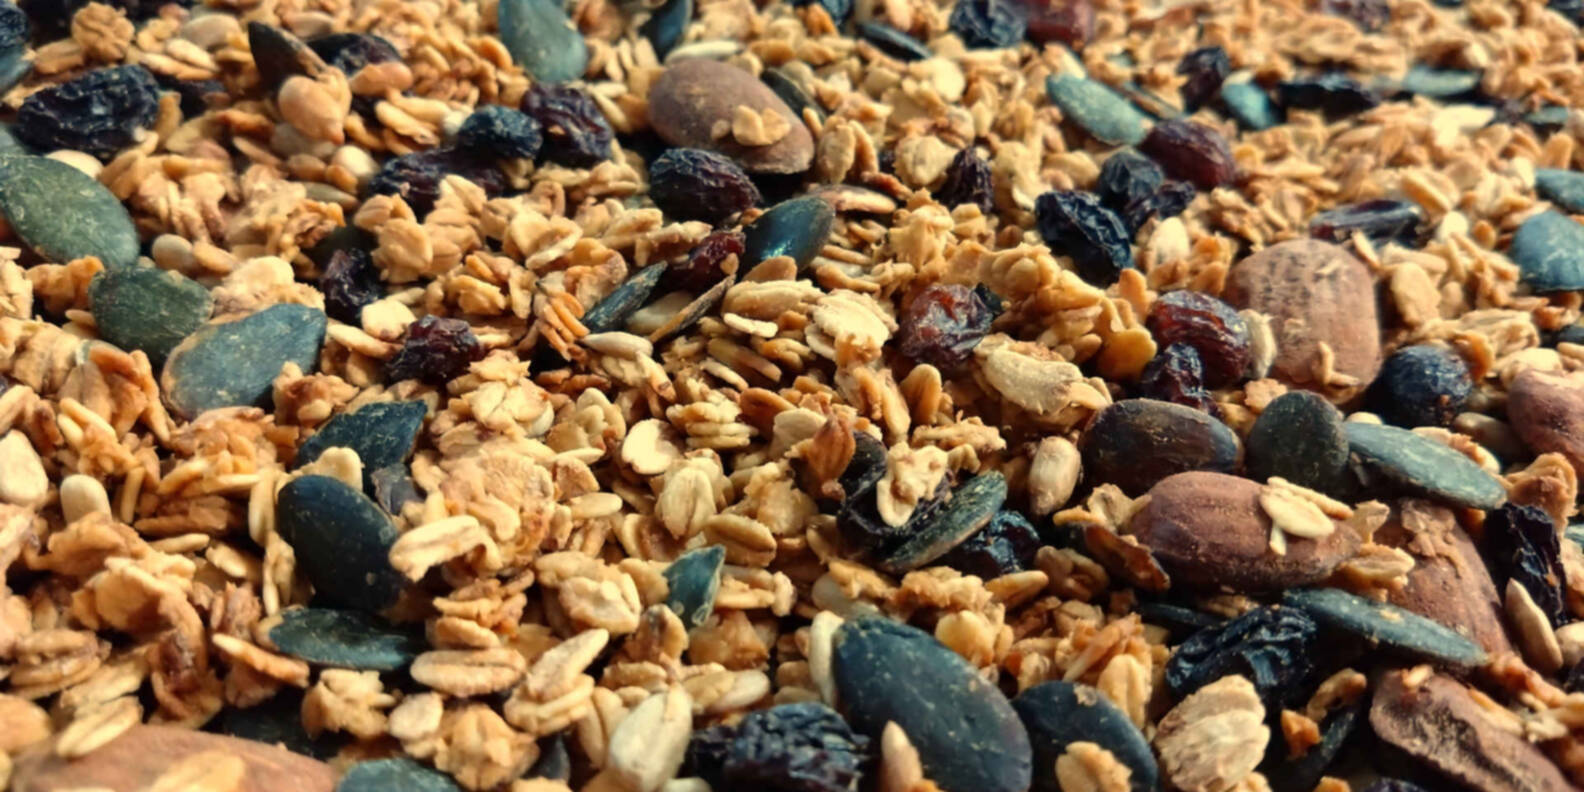 A close-up photo of some granola